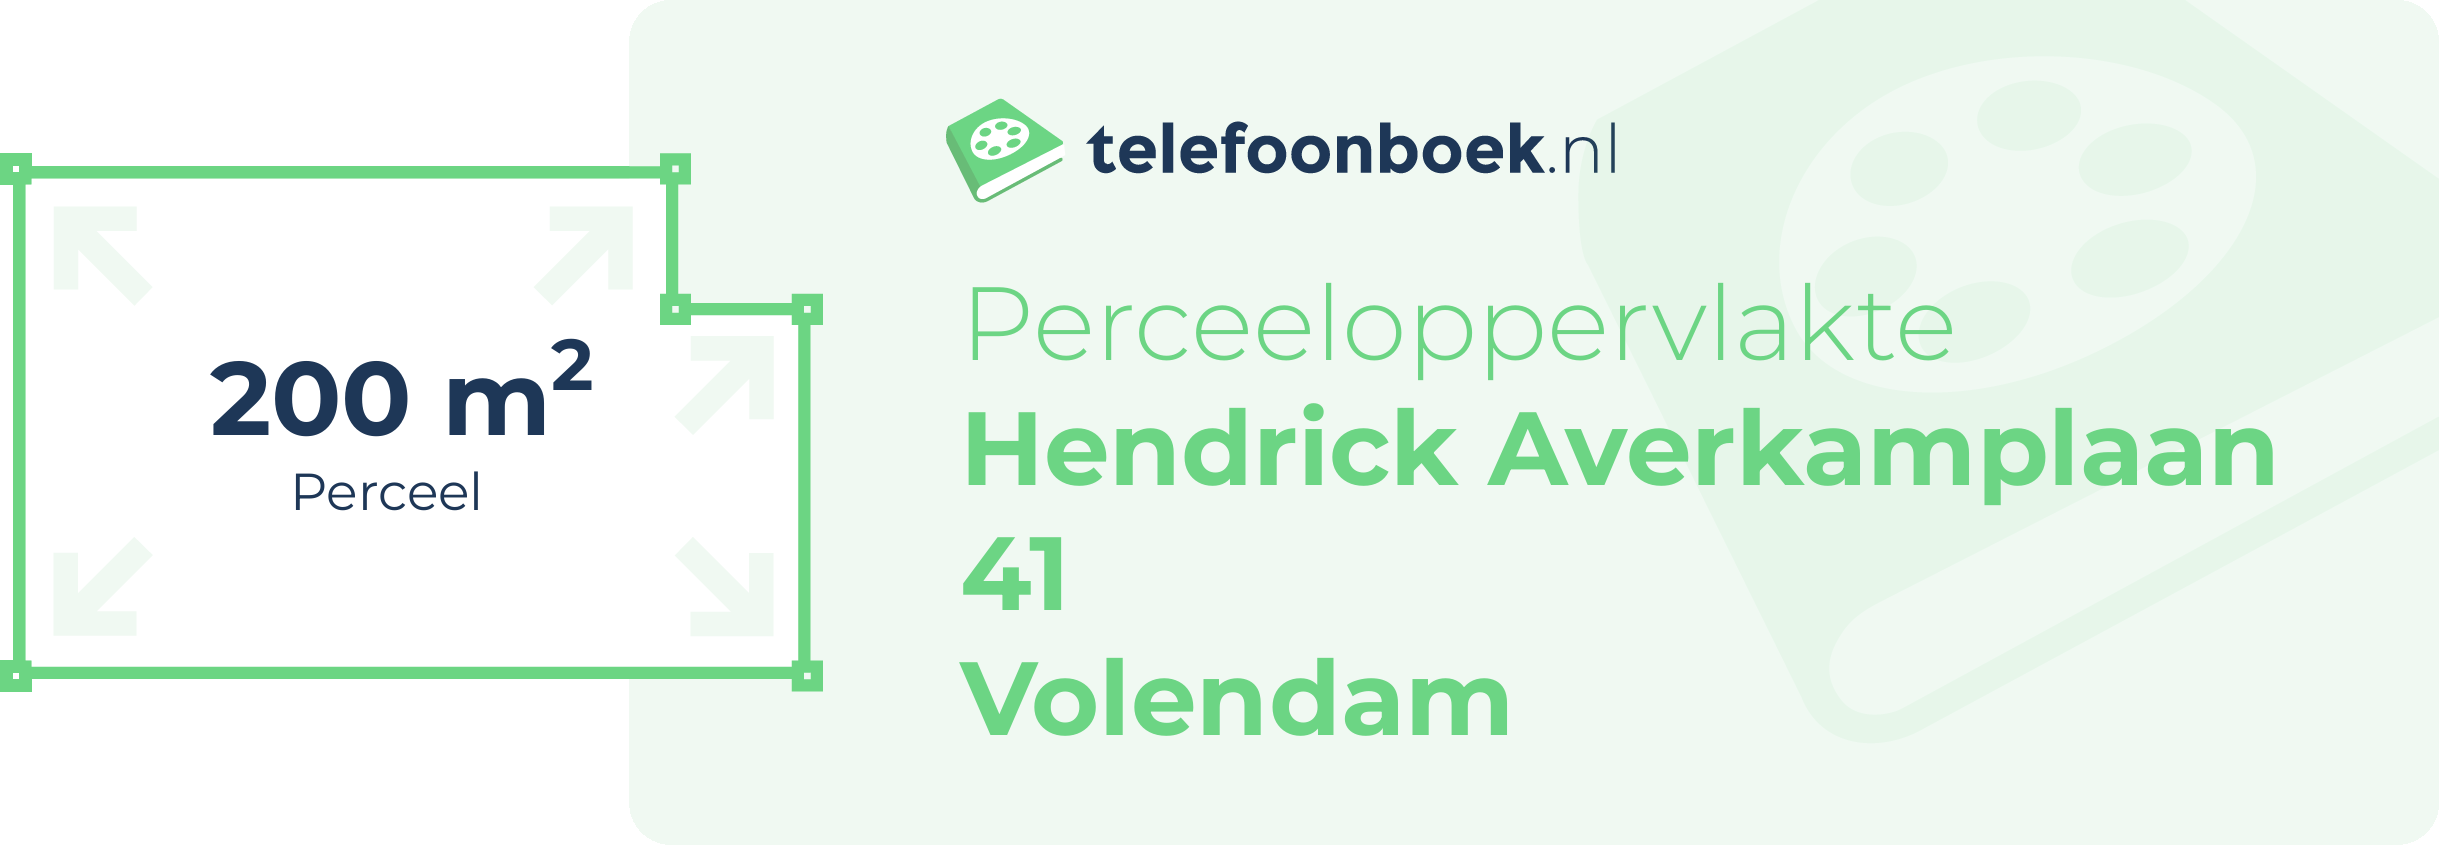 Perceeloppervlakte Hendrick Averkamplaan 41 Volendam